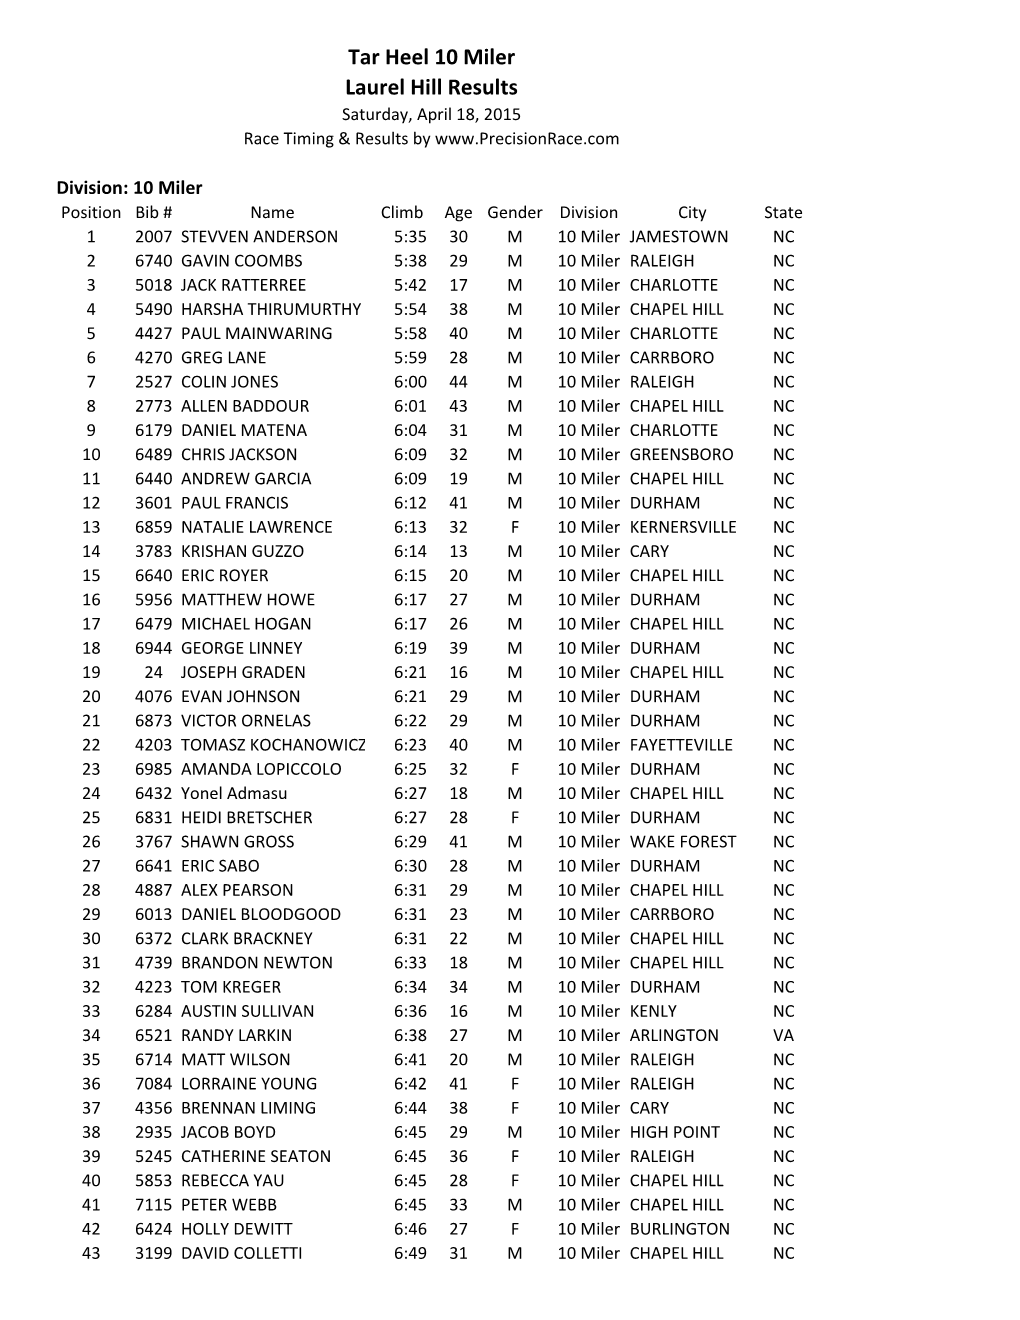 Tar Heel 10 Miler Laurel Hill Results Saturday, April 18, 2015 Race Timing & Results By